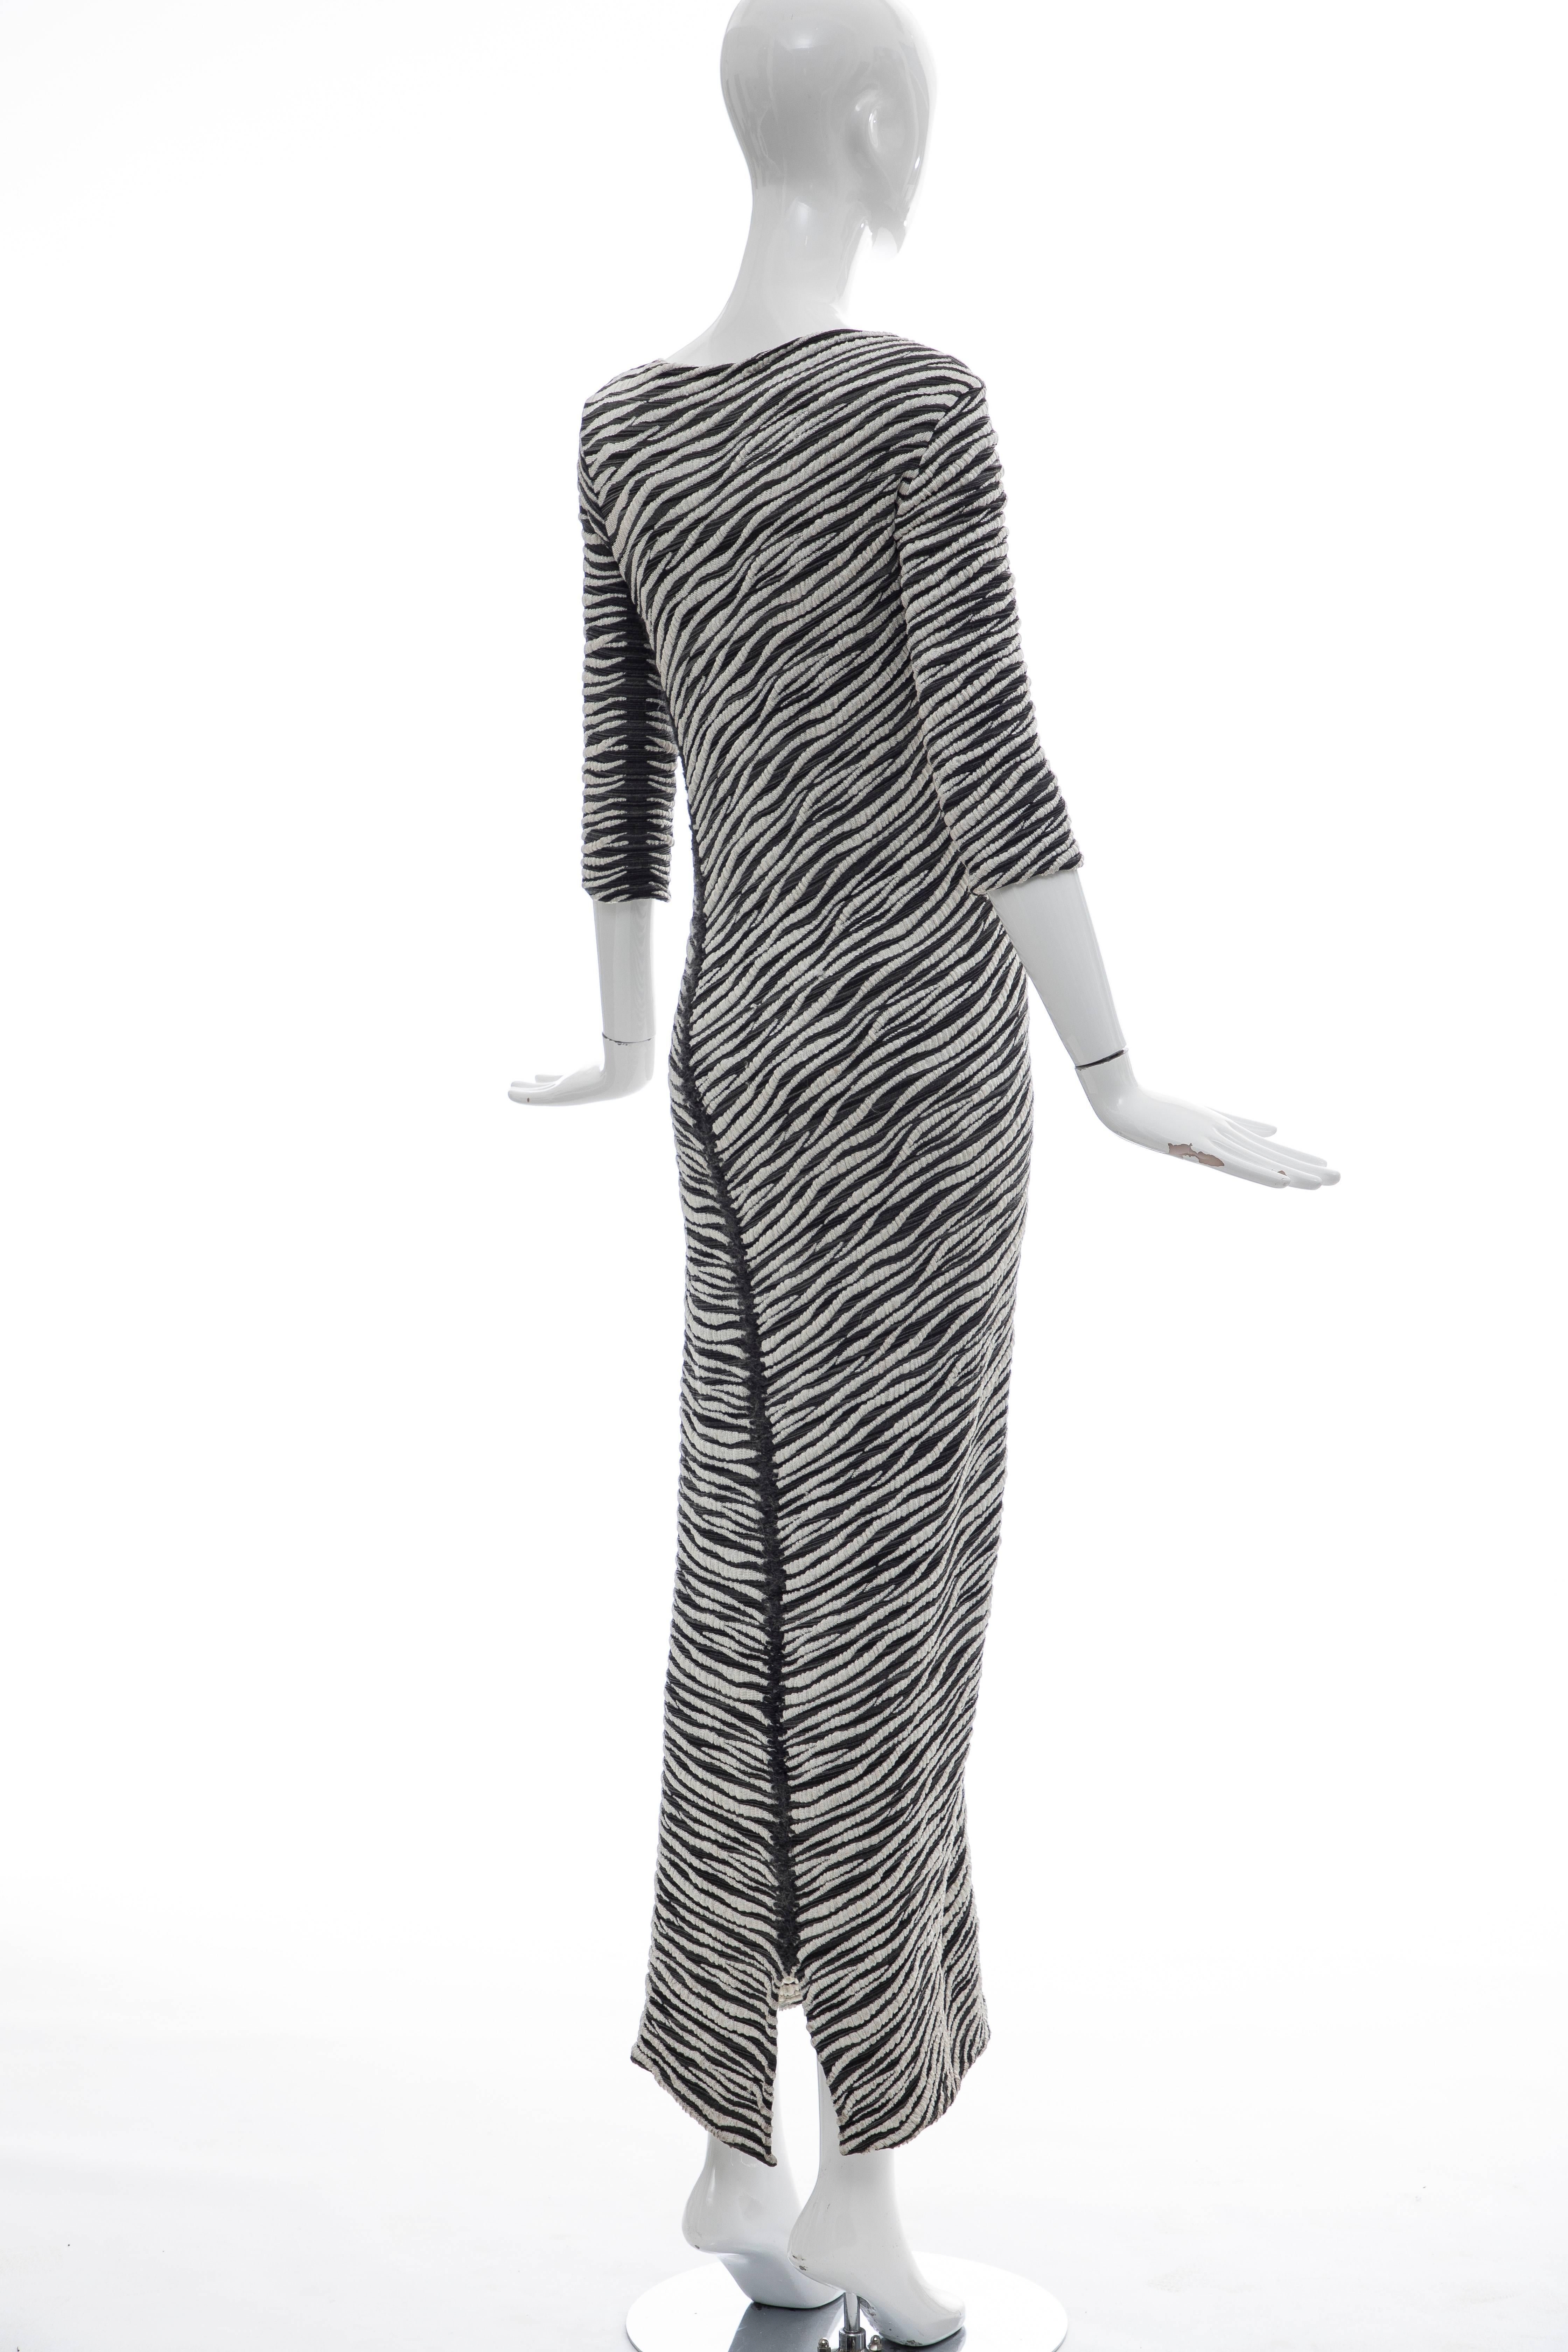 Gianfranco Ferre Long Sleeve Stretch Knit Dress, Circa 1990's For Sale 1